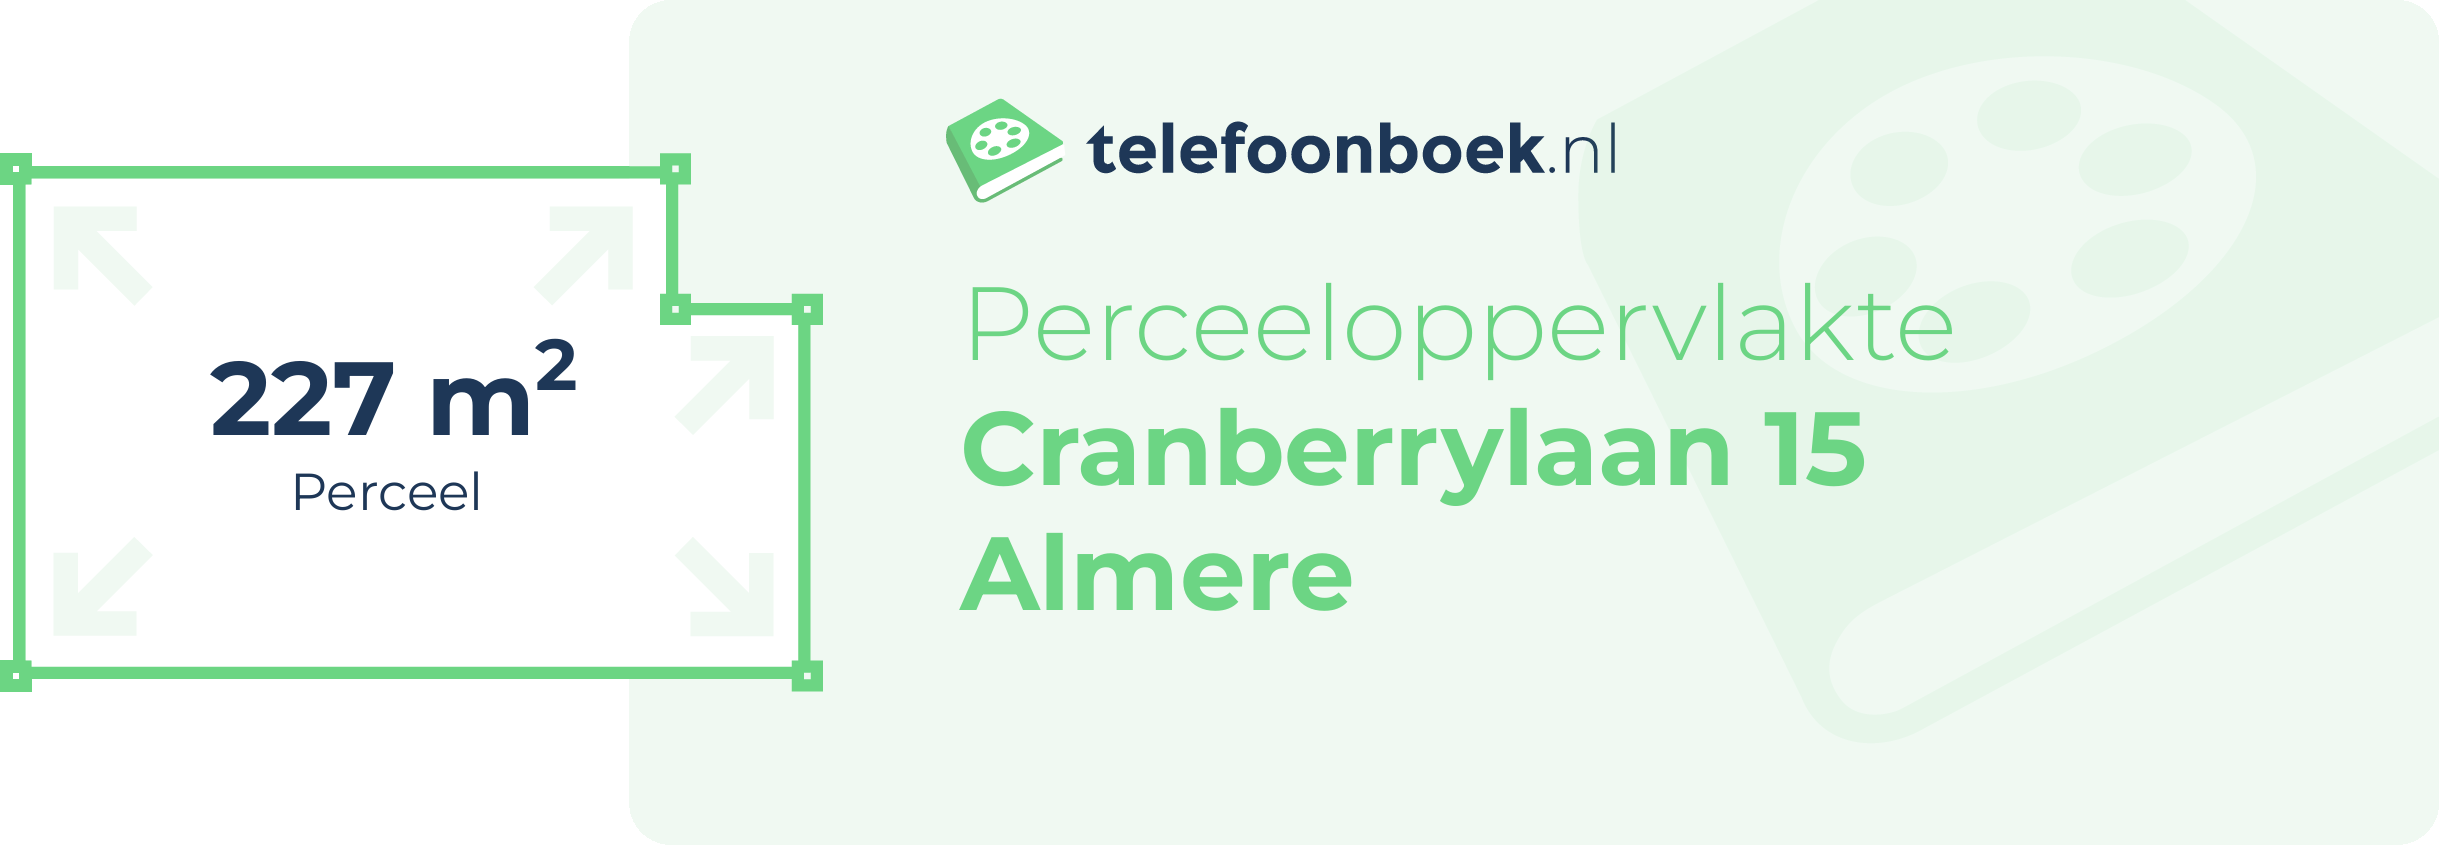 Perceeloppervlakte Cranberrylaan 15 Almere